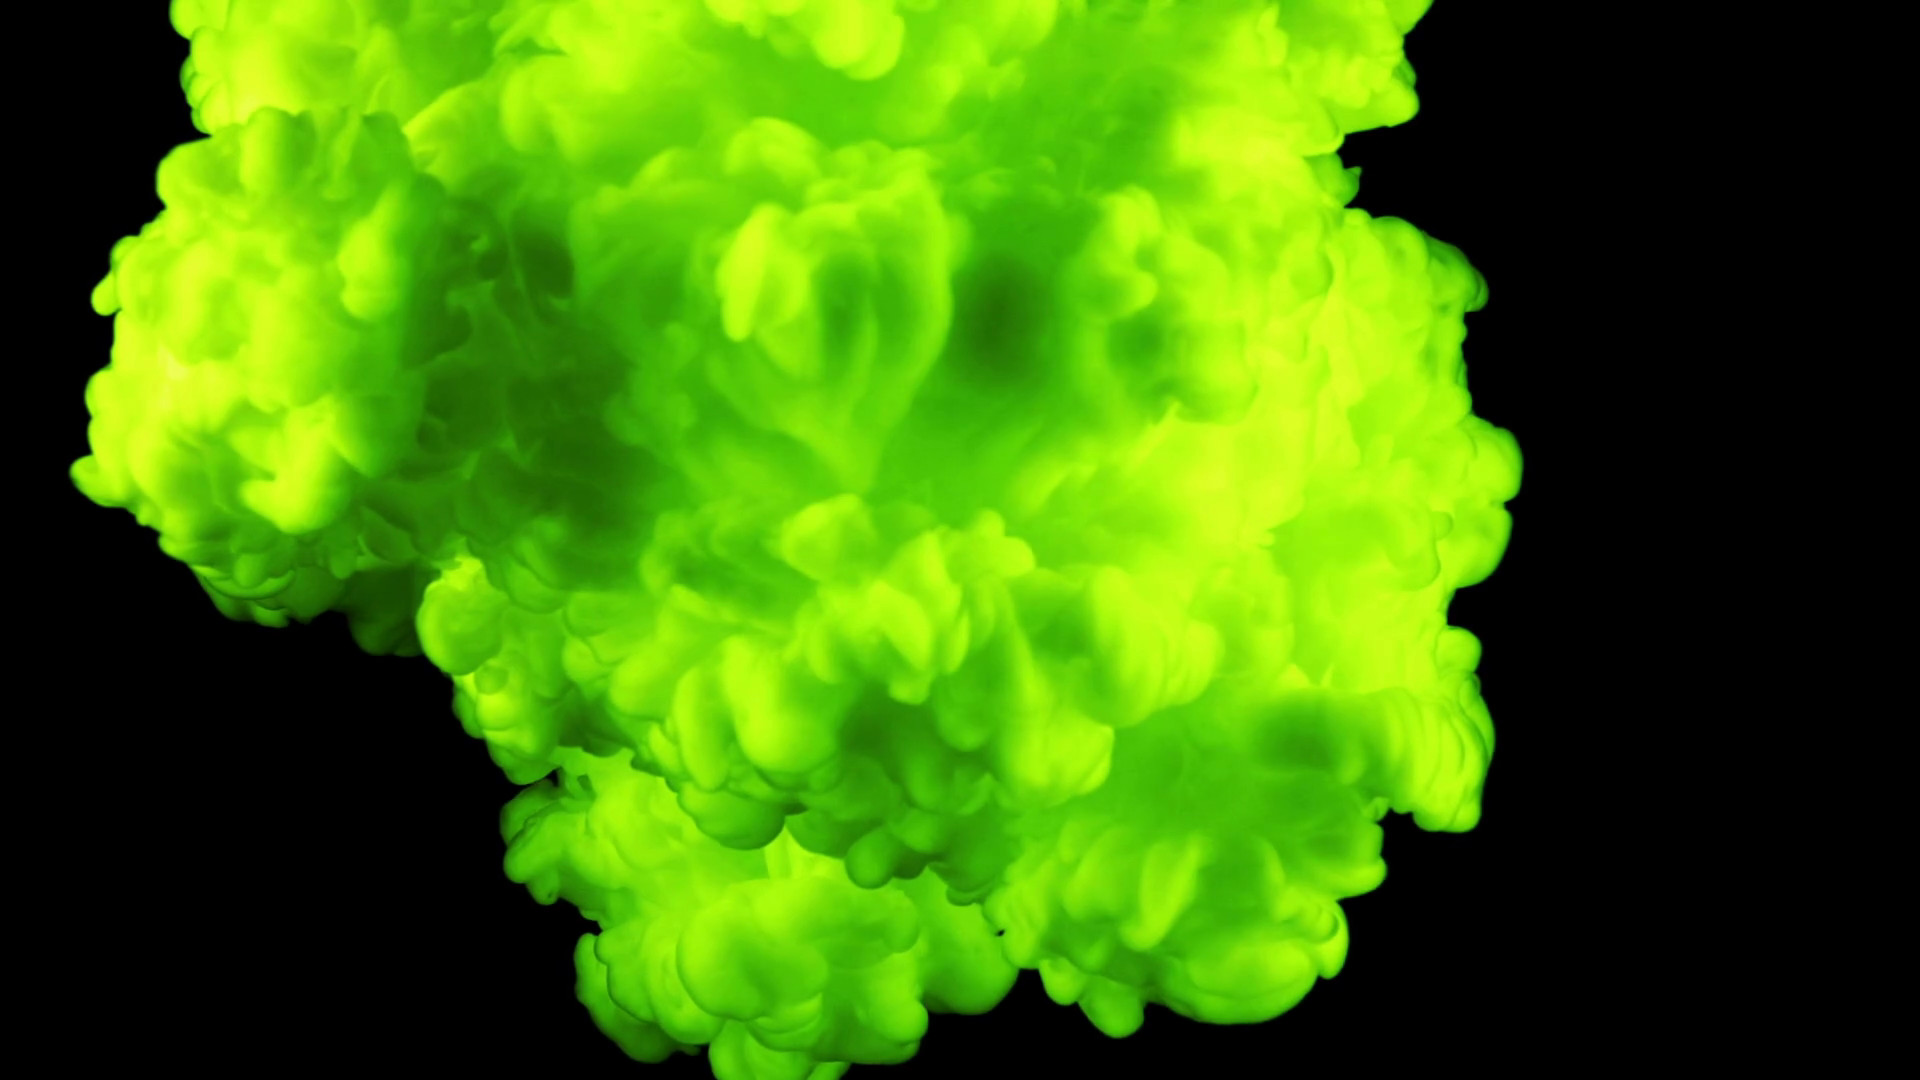 Green Smoke explosion